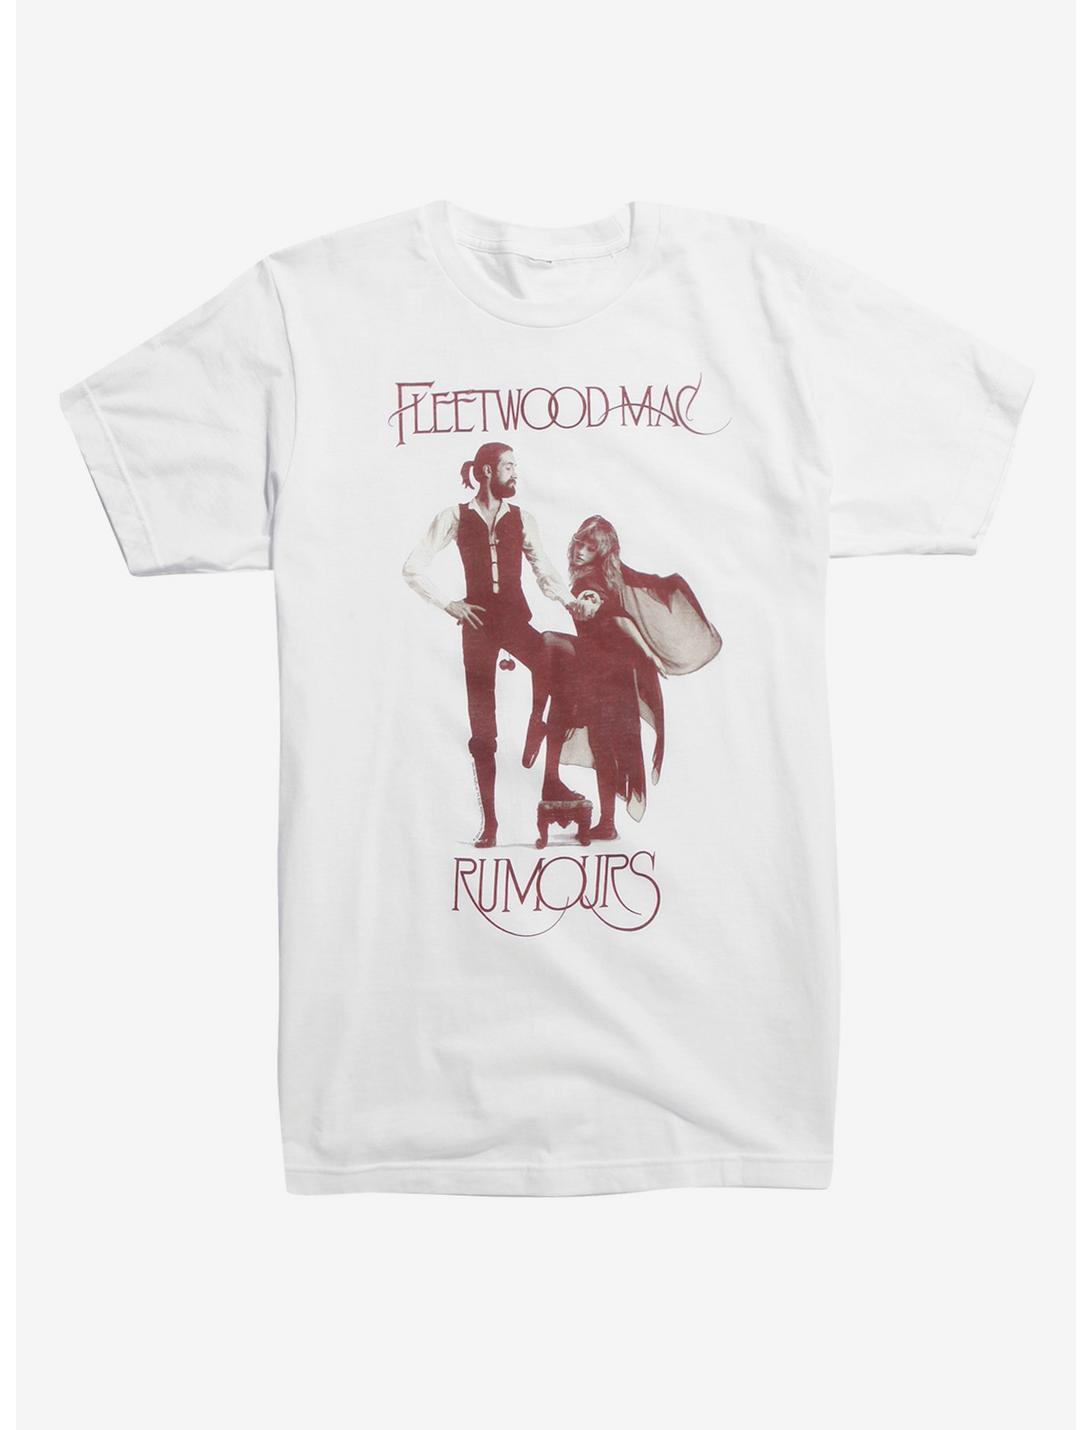 Fleetwood Mac Rumors Cover T-Shirt | Hot Topic